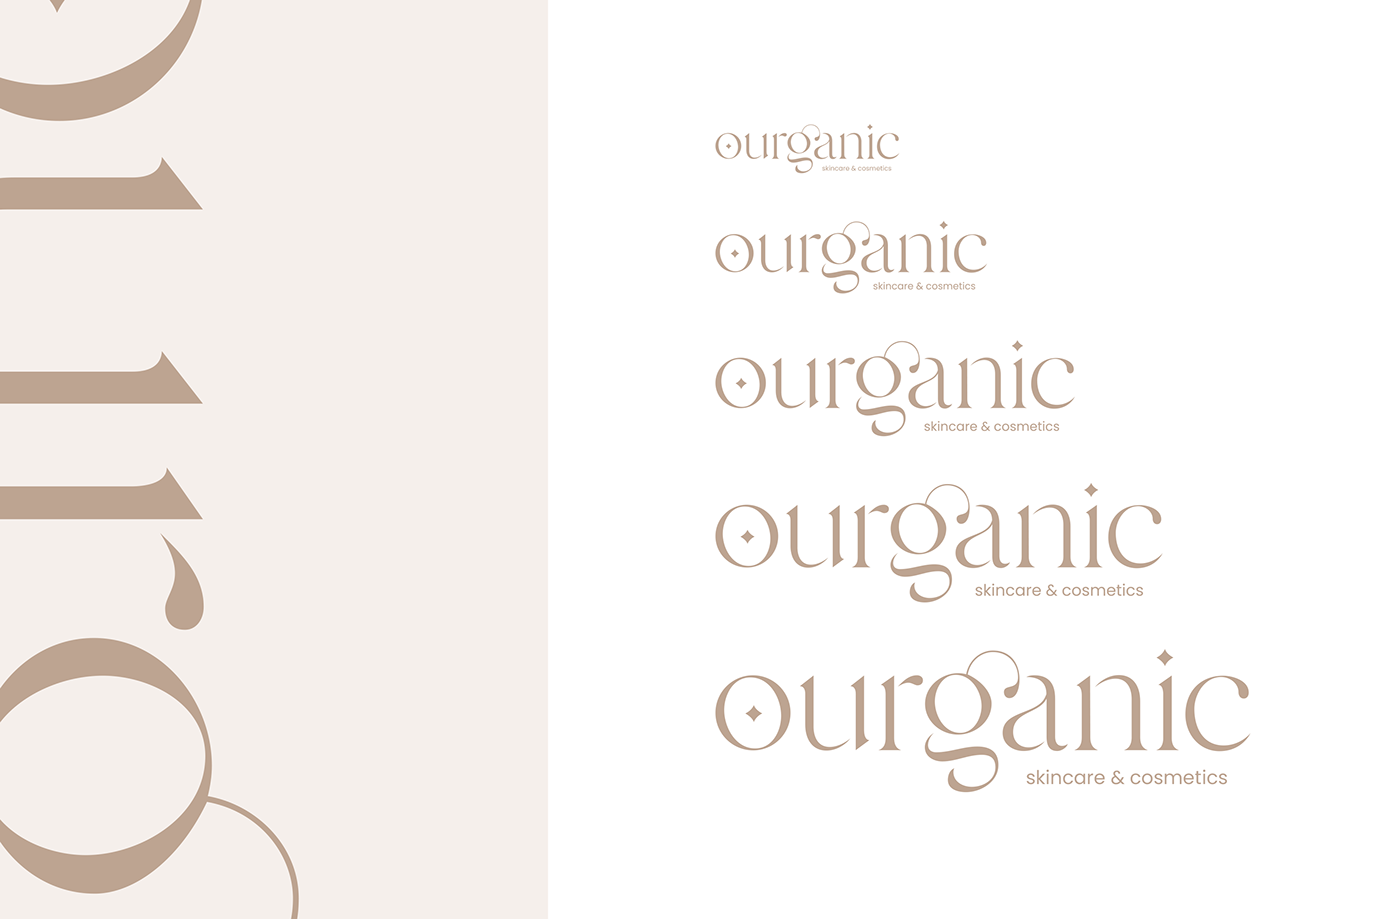 cosmetics skincare beauty face logo organic Packaging product skin